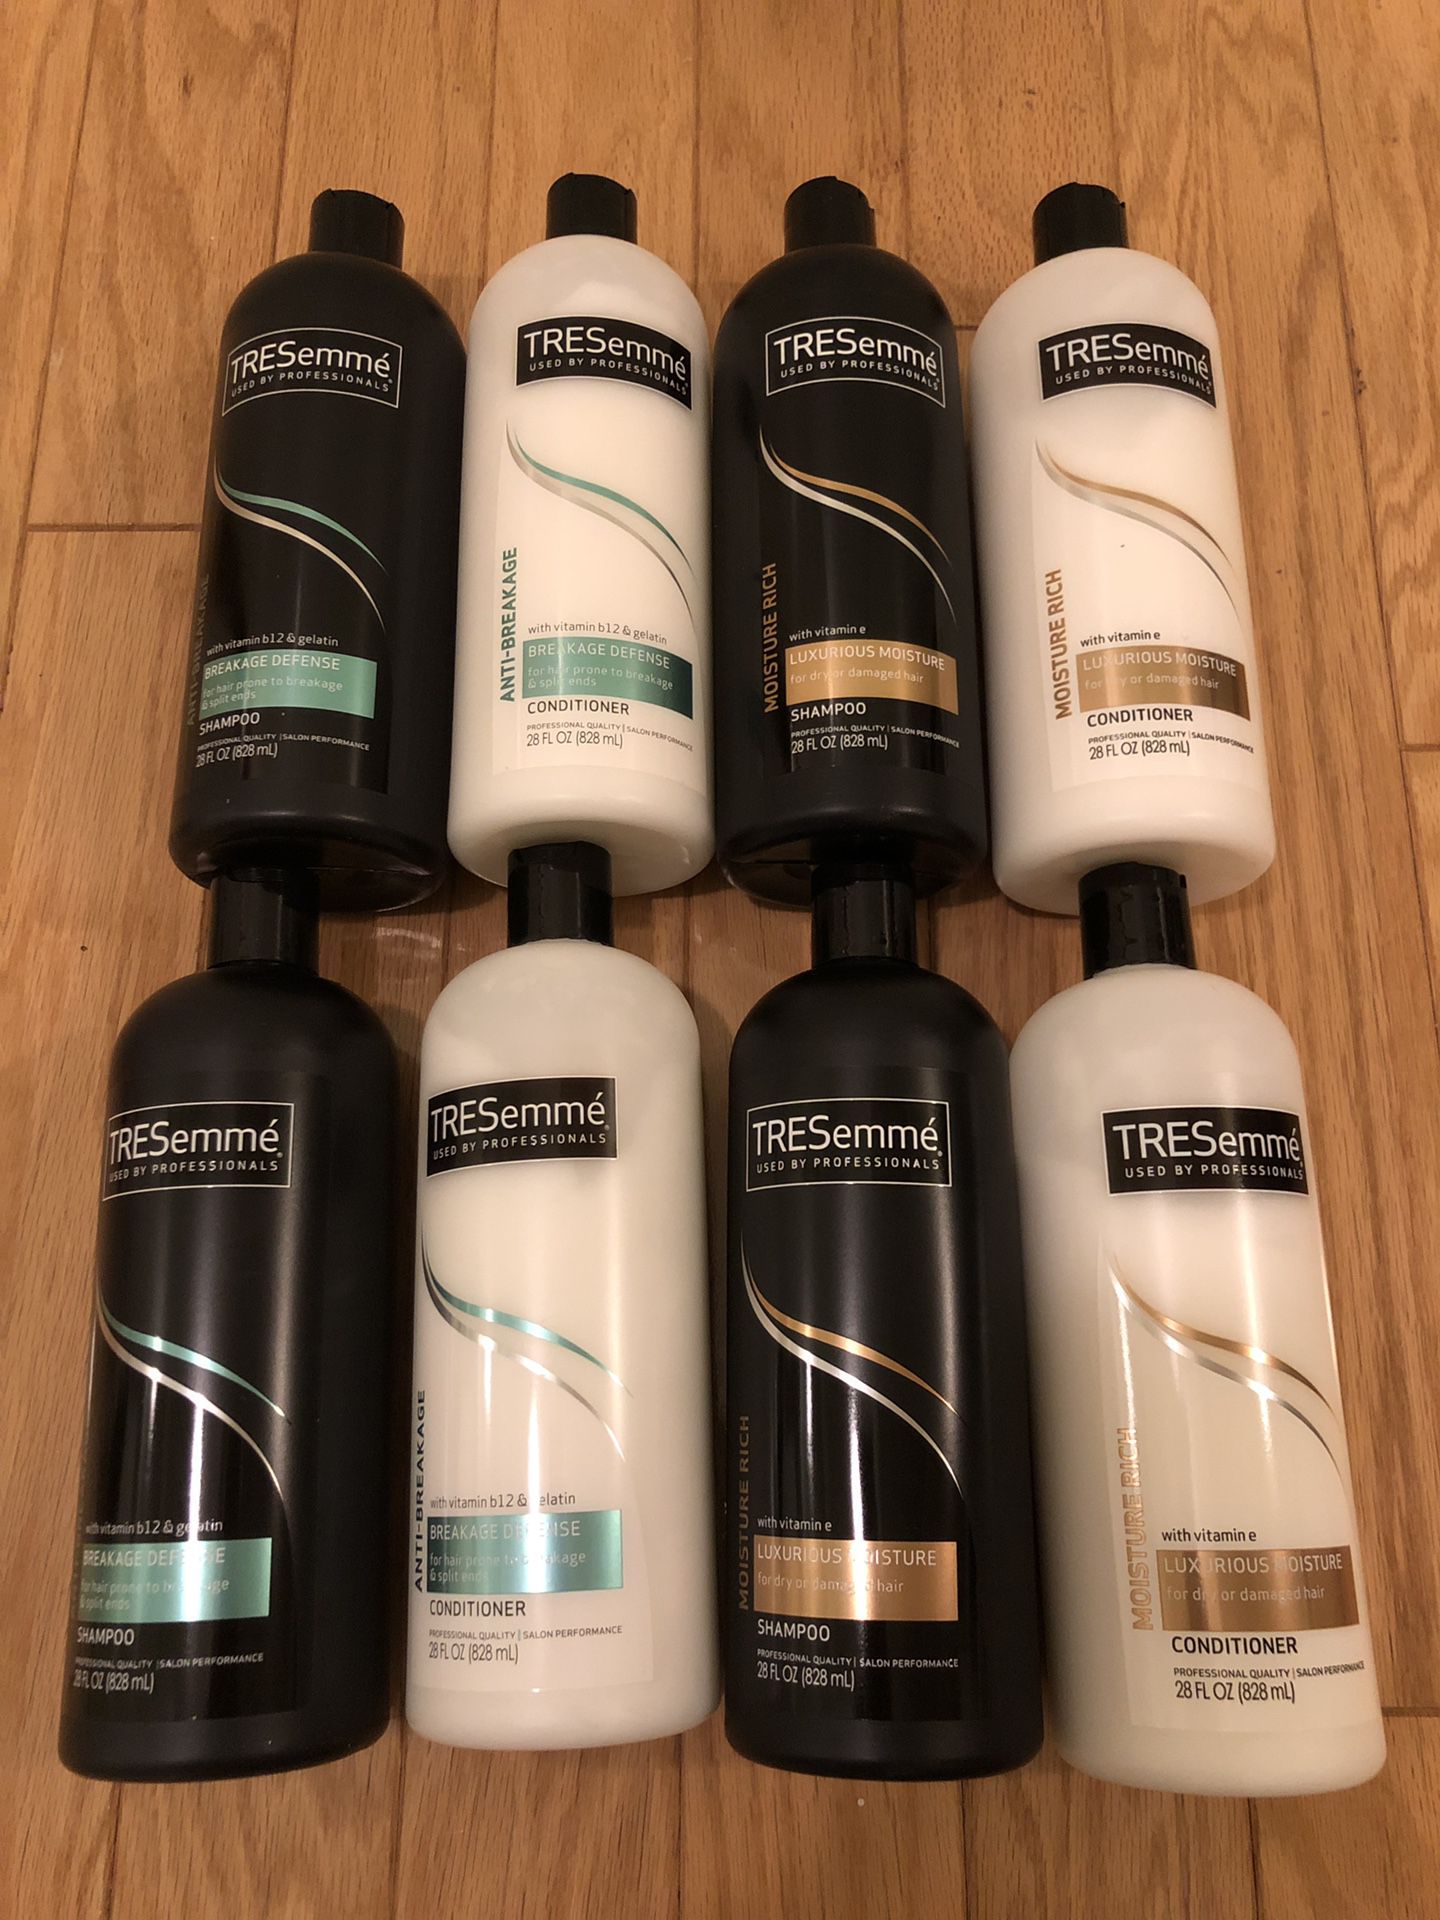 8 Tresemme shampoo & conditioner